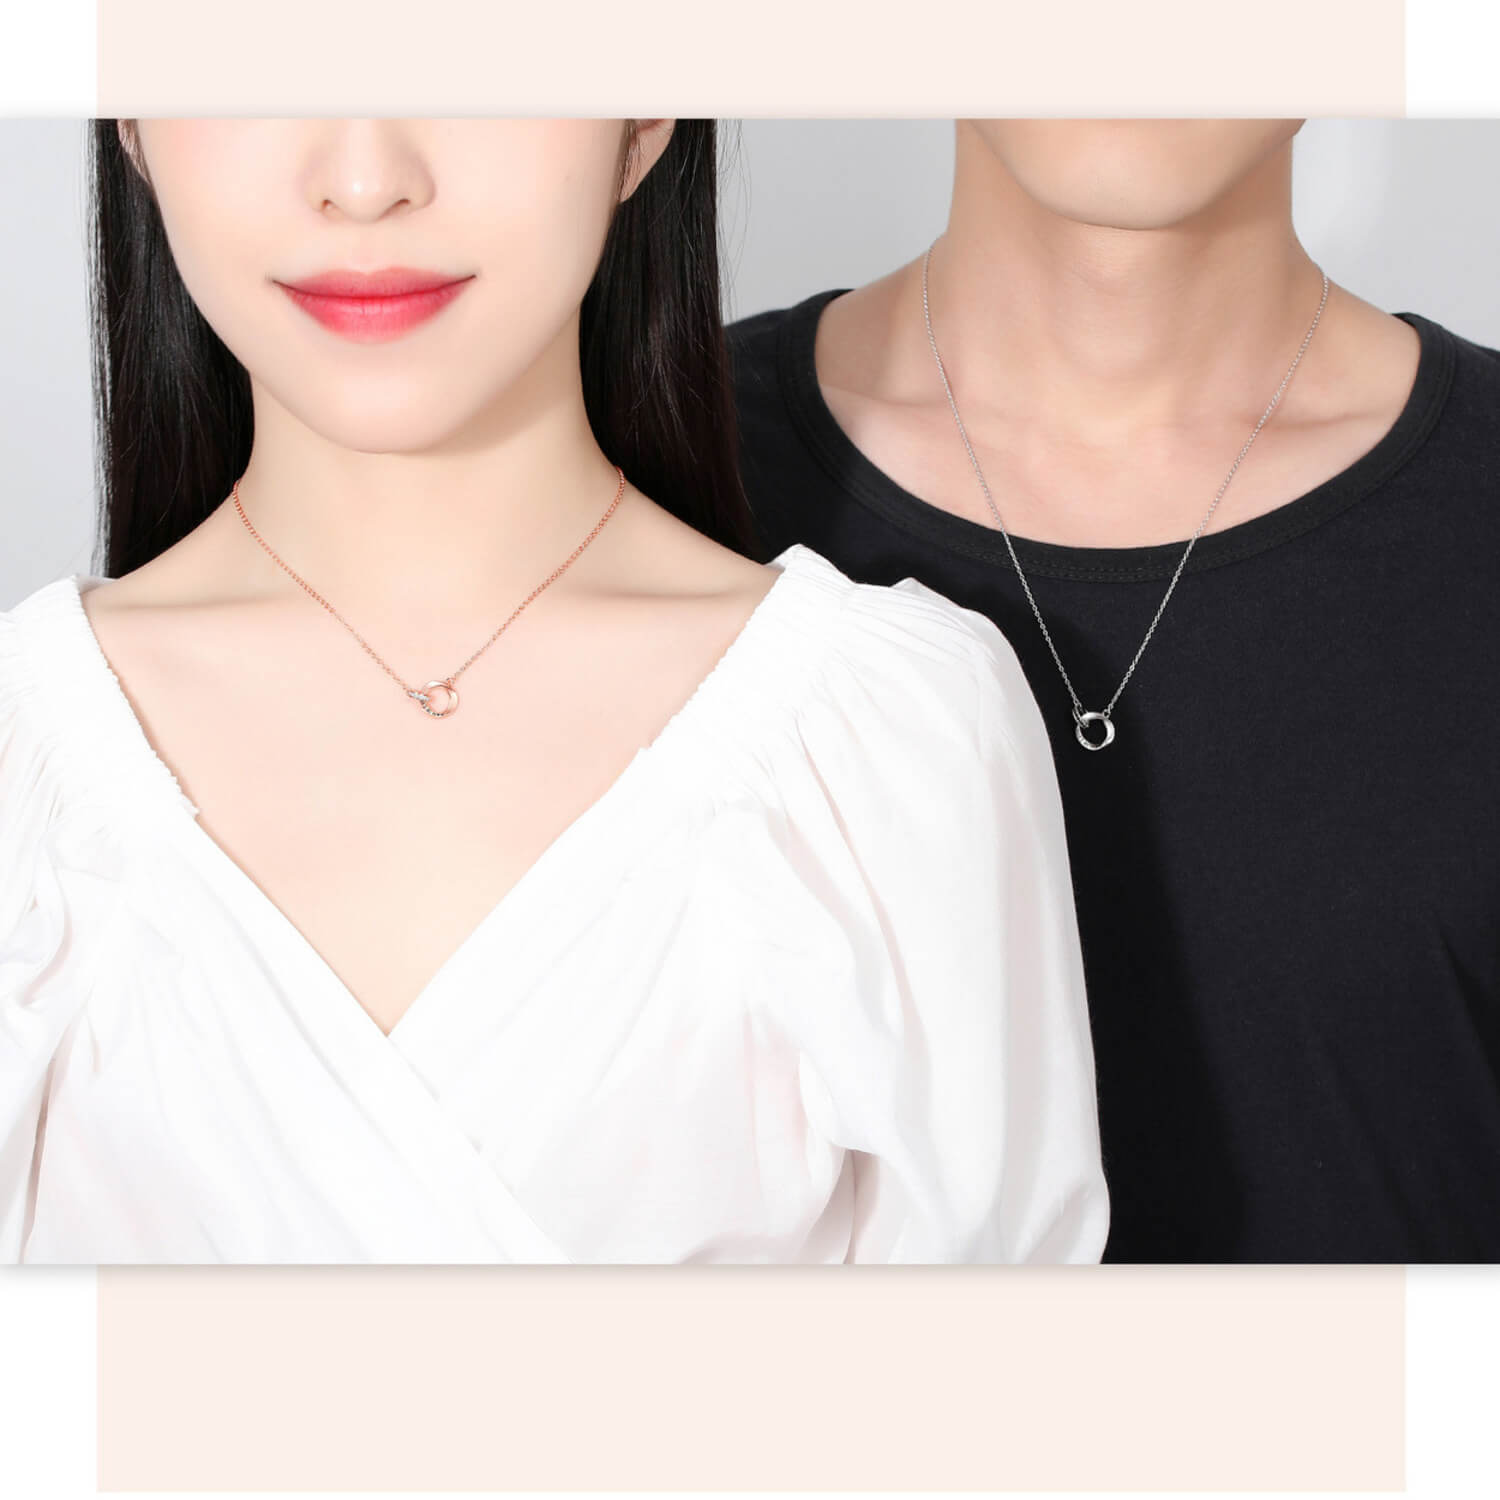 fall in love interlocking necklace ebay